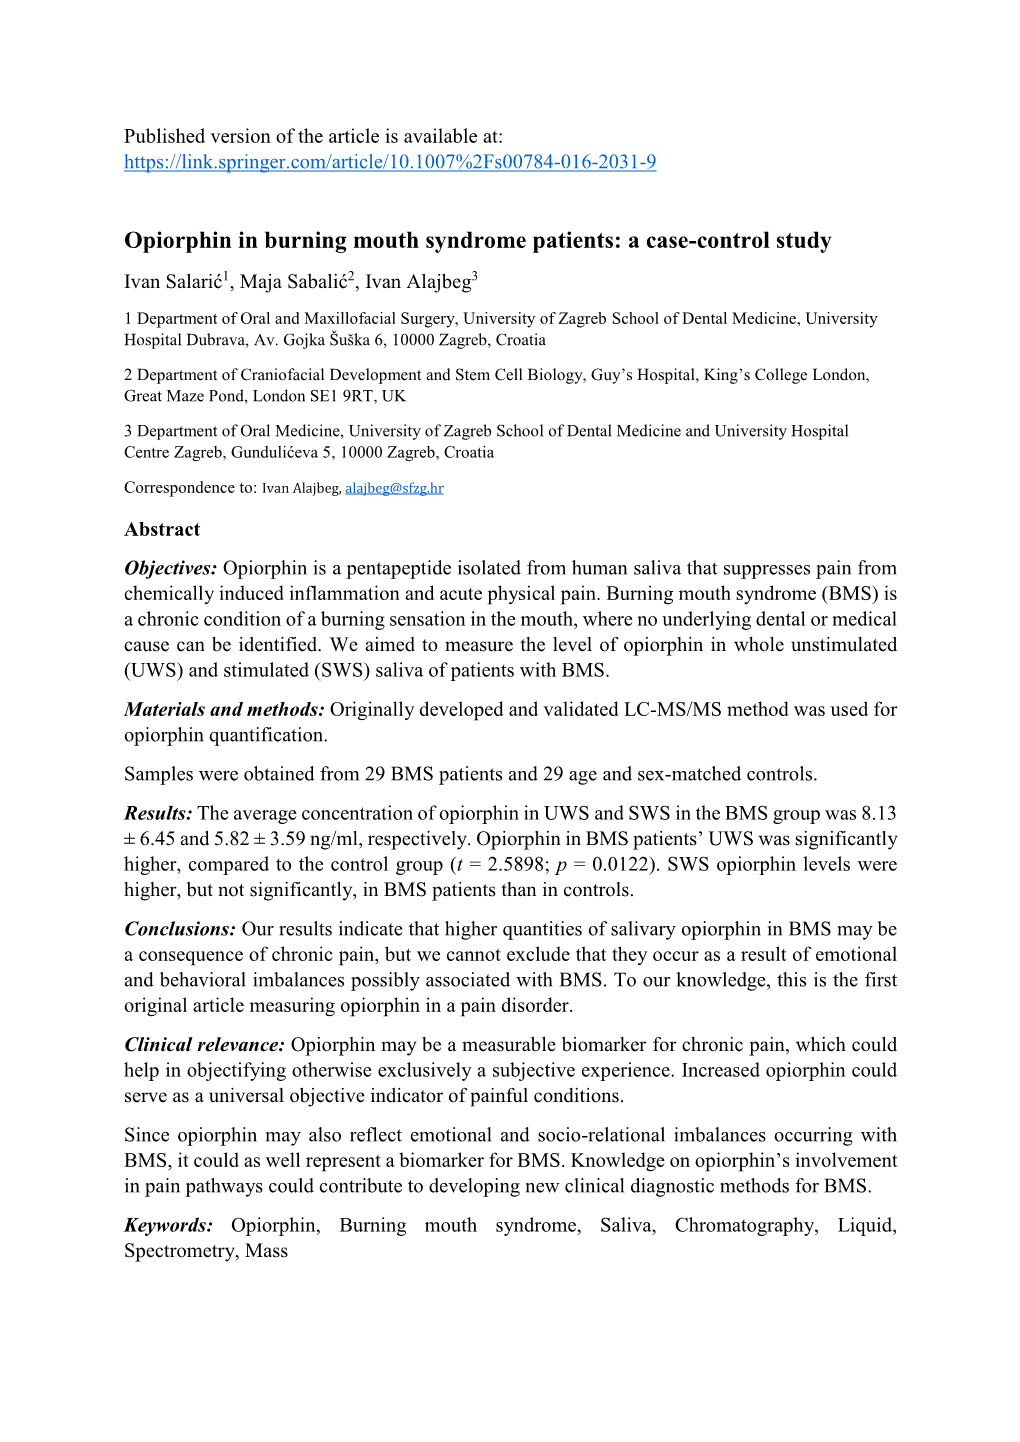 Opiorphin in Burning Mouth Syndrome Patients: a Case-Control Study Ivan Salarić1, Maja Sabalić2, Ivan Alajbeg3